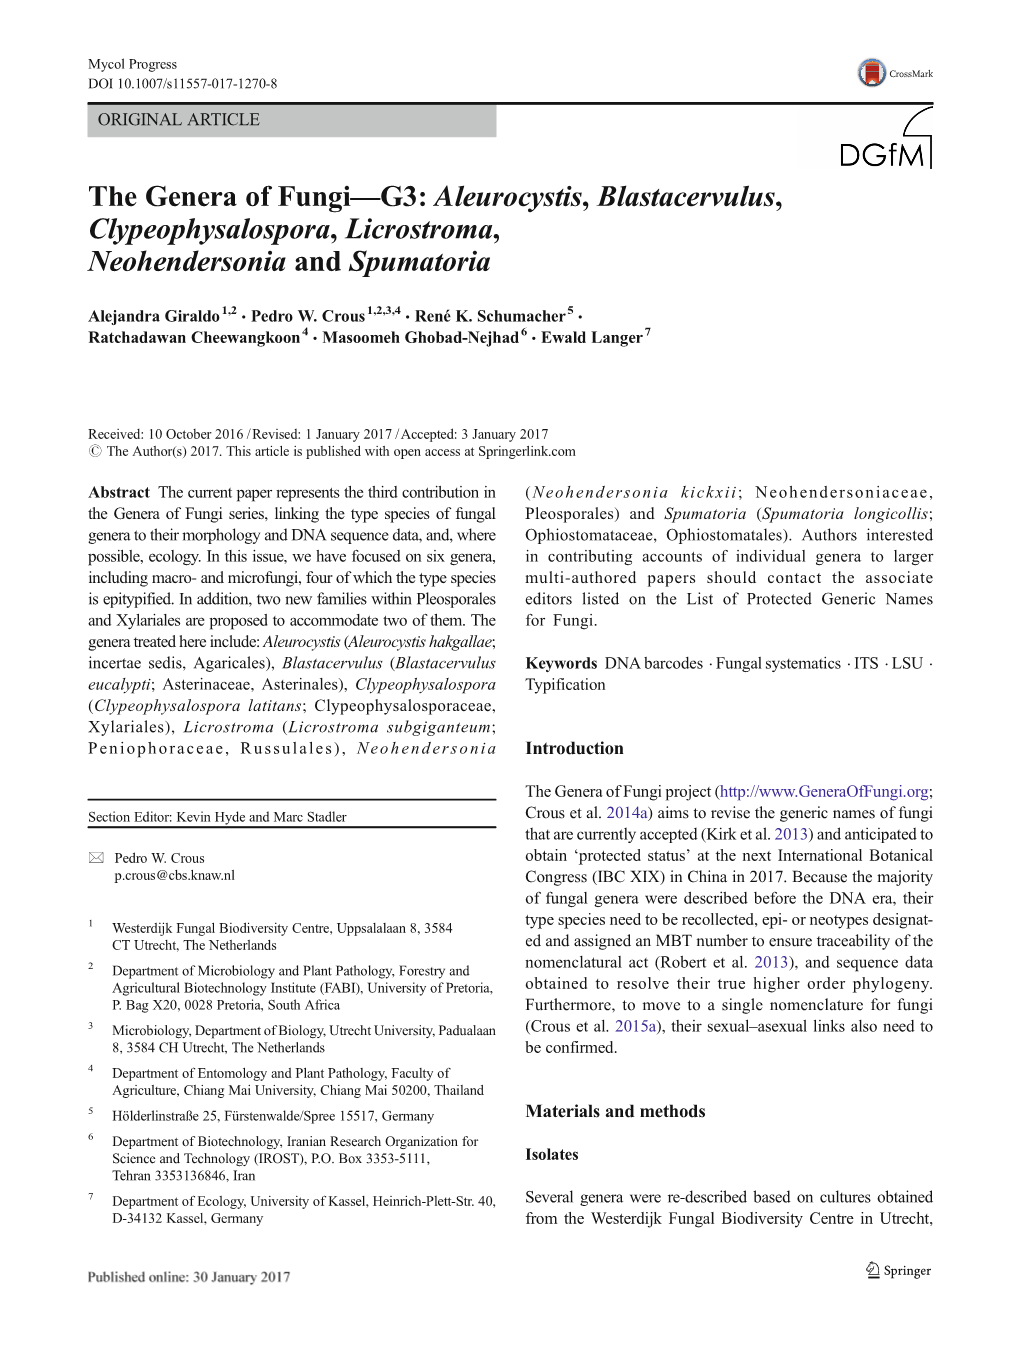 The Genera of Fungi—G3: Aleurocystis, Blastacervulus, Clypeophysalospora, Licrostroma, Neohendersonia and Spumatoria